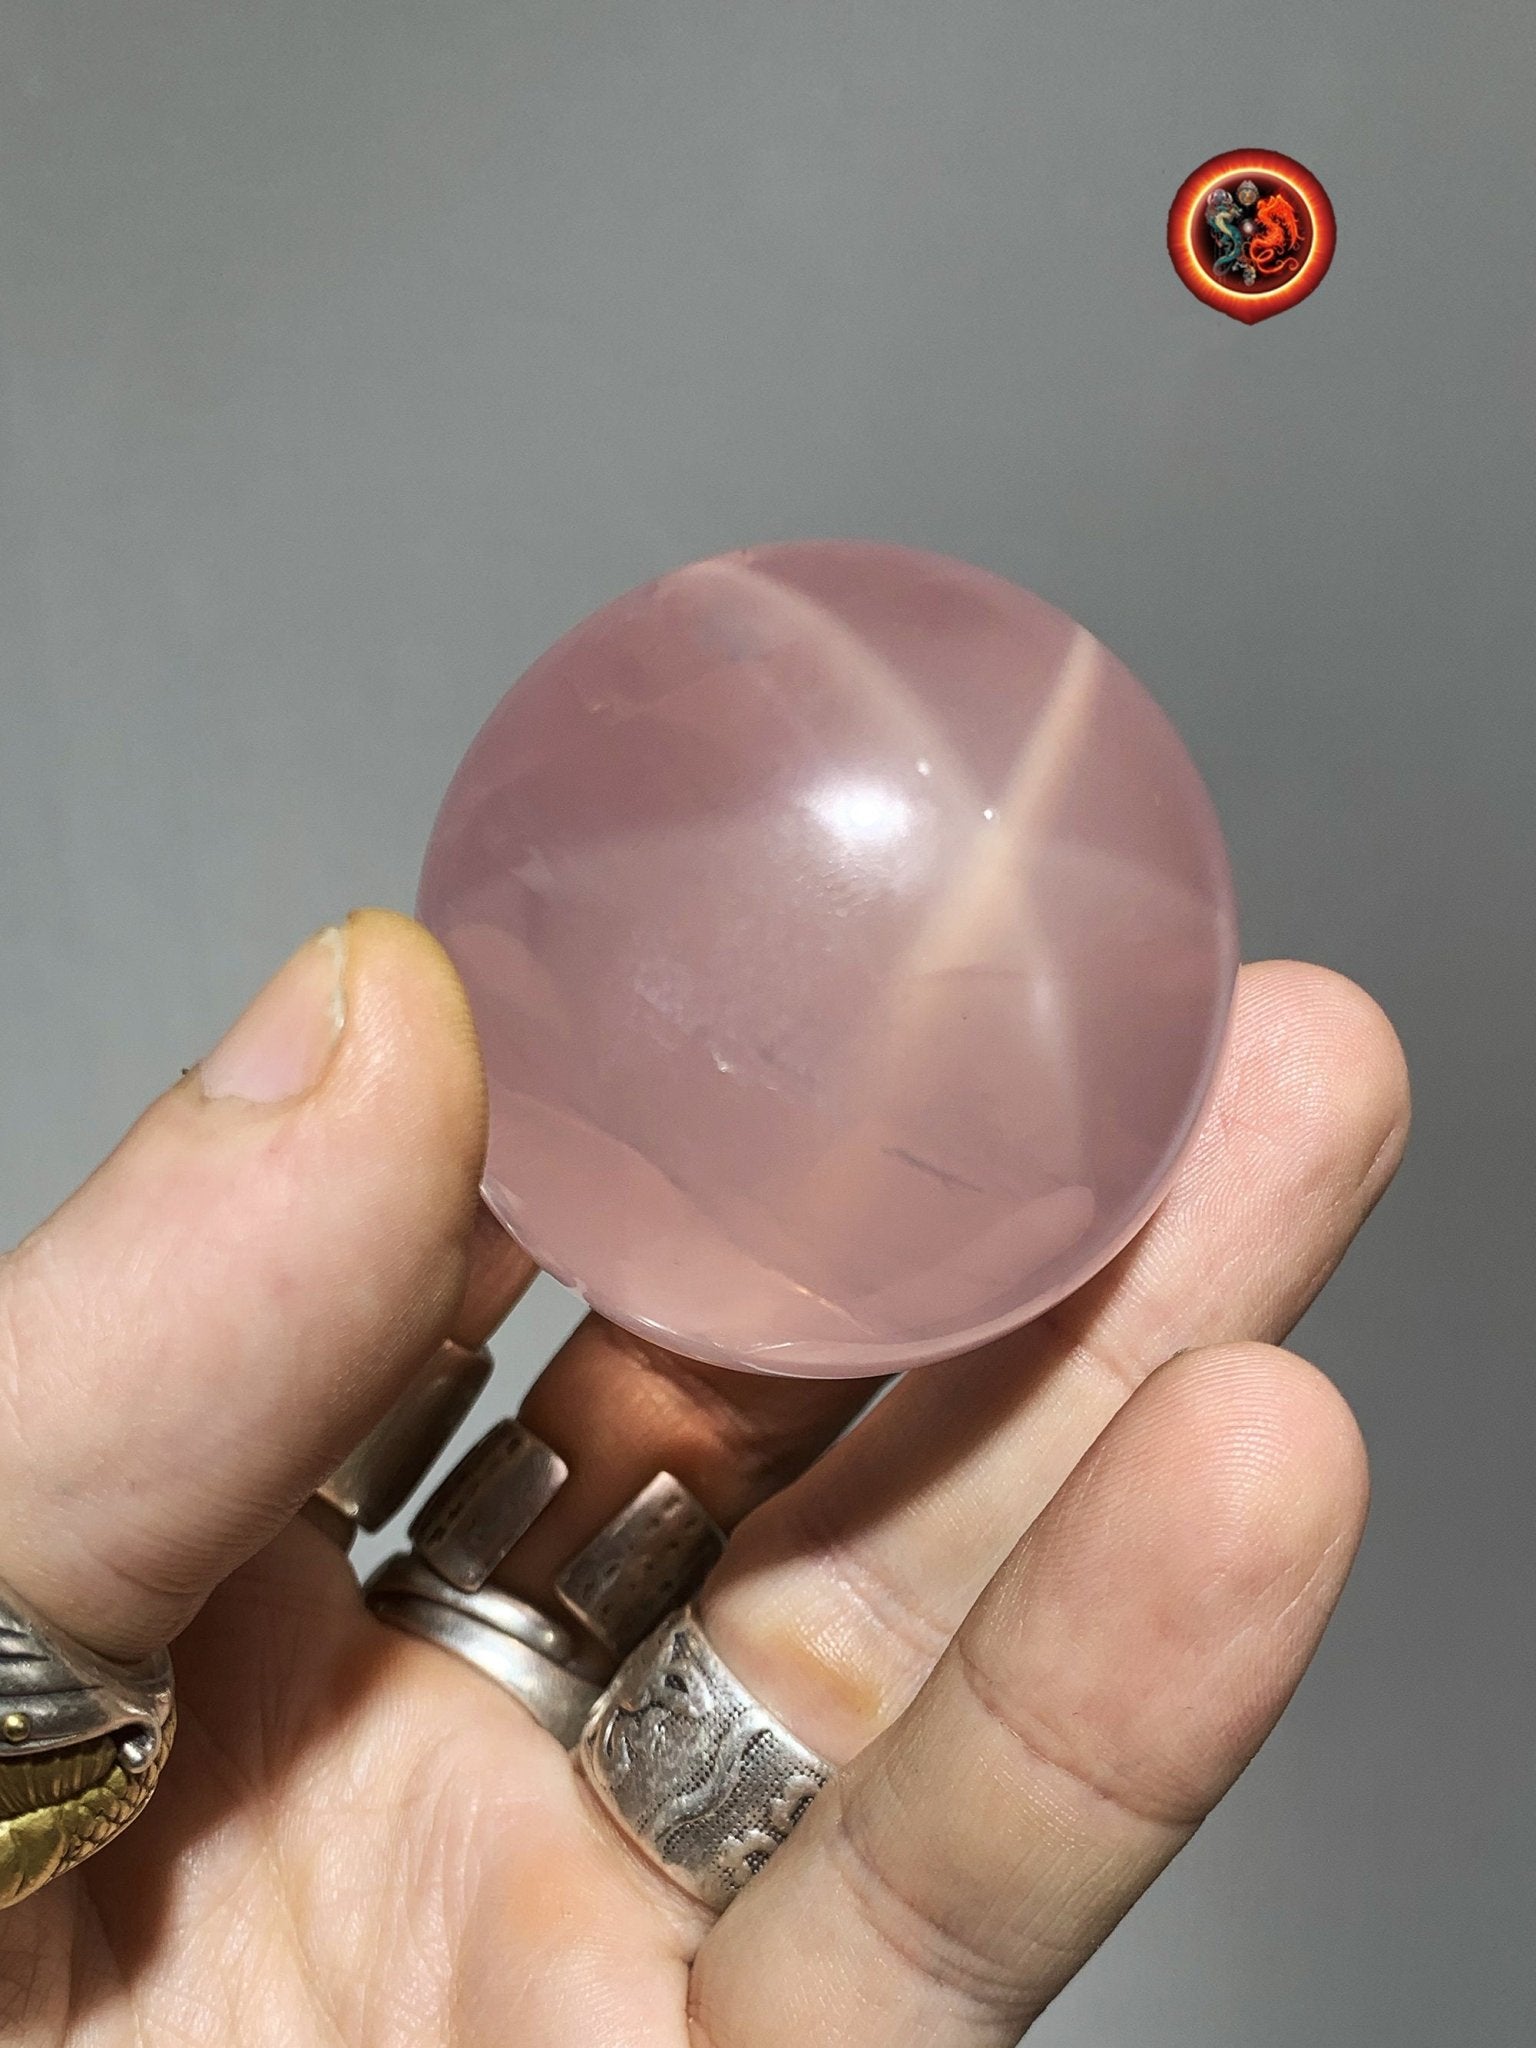 Sphère, quartz rose étoilé, quartz rose astérié ou quartz rose astérisé. Provenance du Mozambique. quartz rose naturel. 46mm de diamètre - obsidian dragon